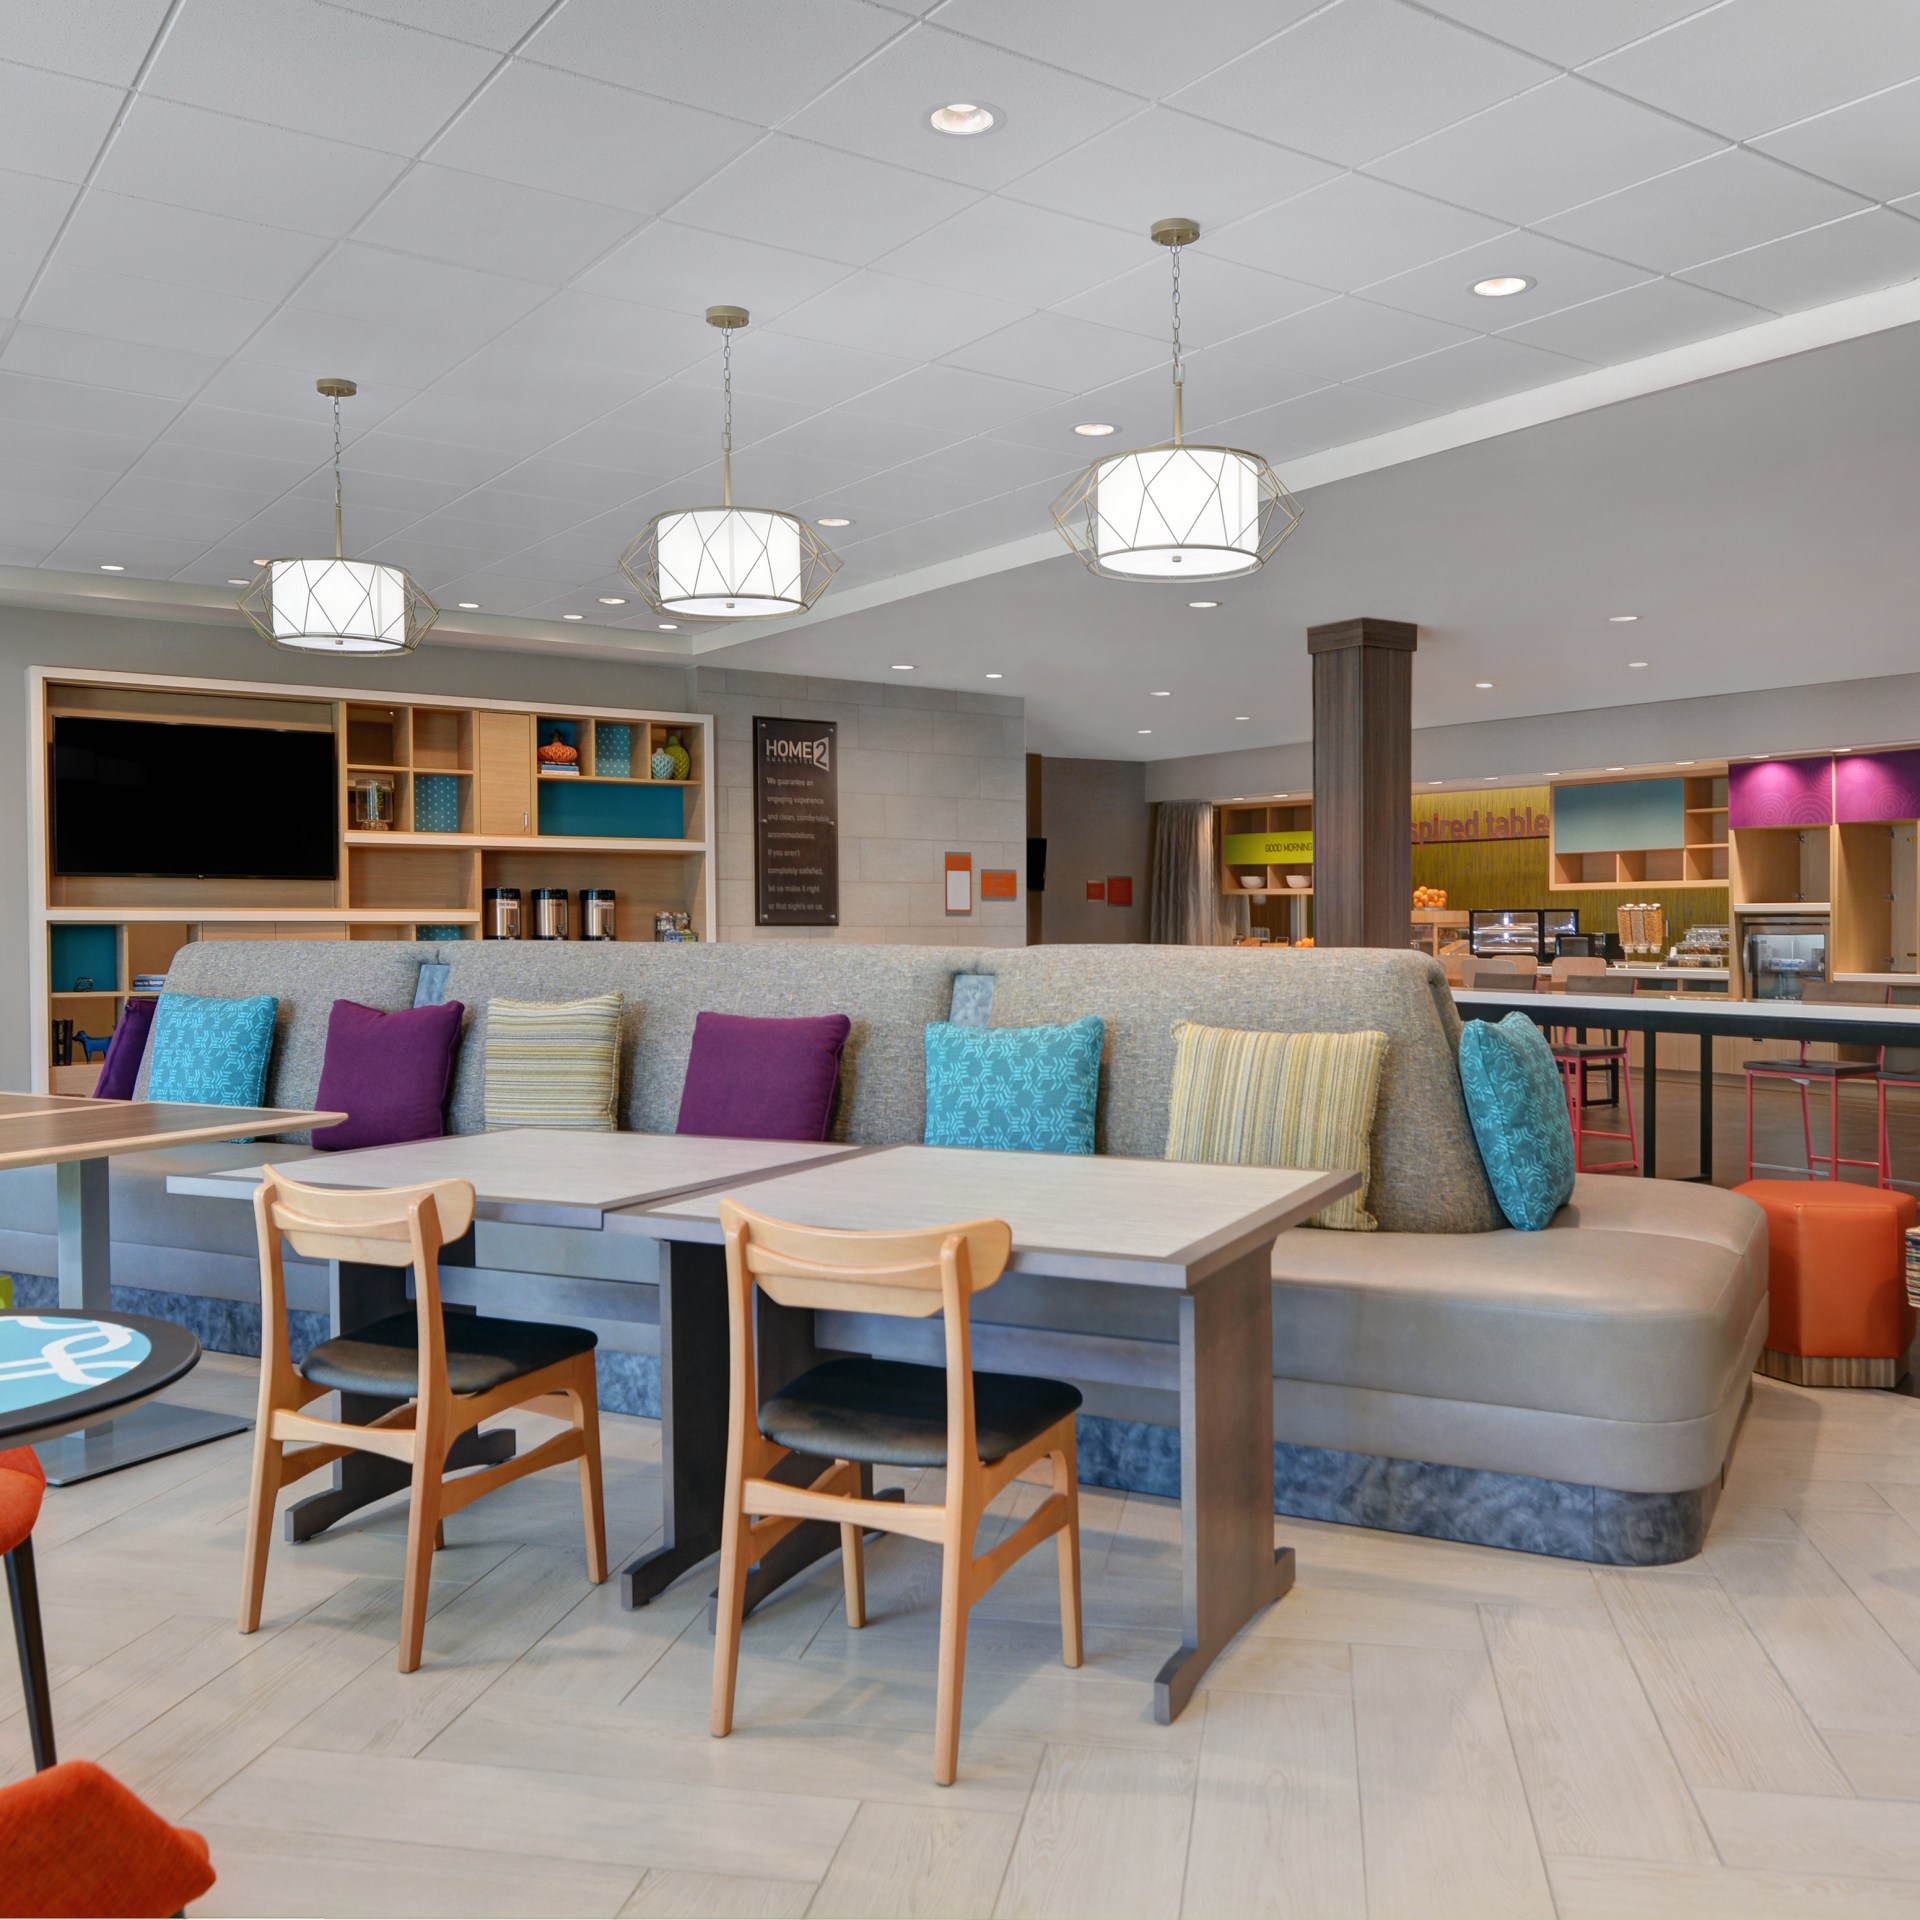 Home2 Suites by Hilton Panama City Beach - Lobby